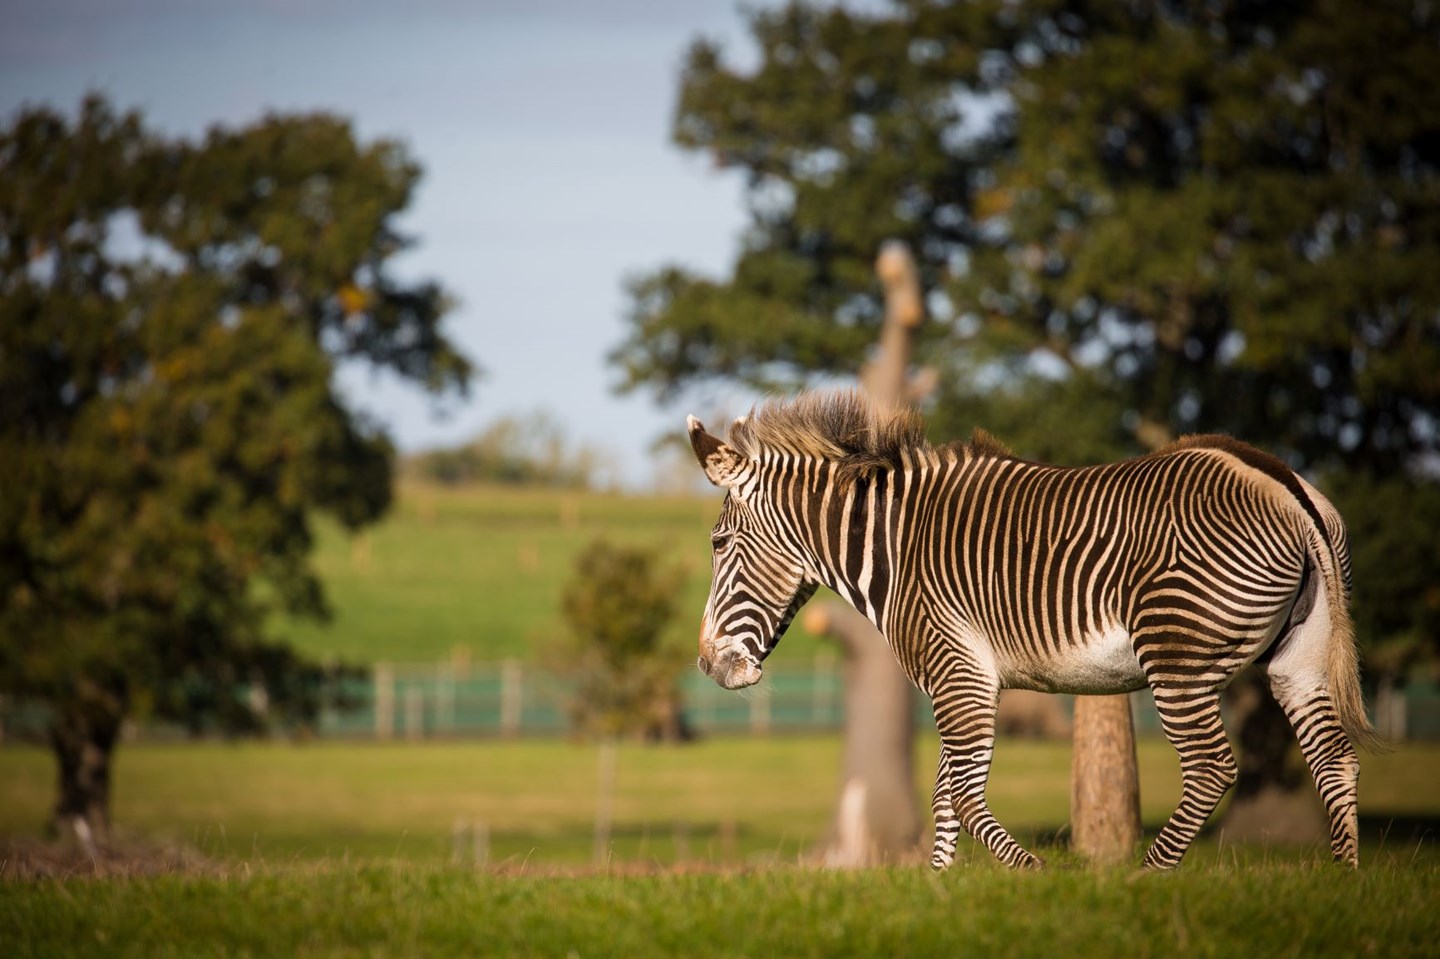 Zebra walks through expansive grassy reserve 